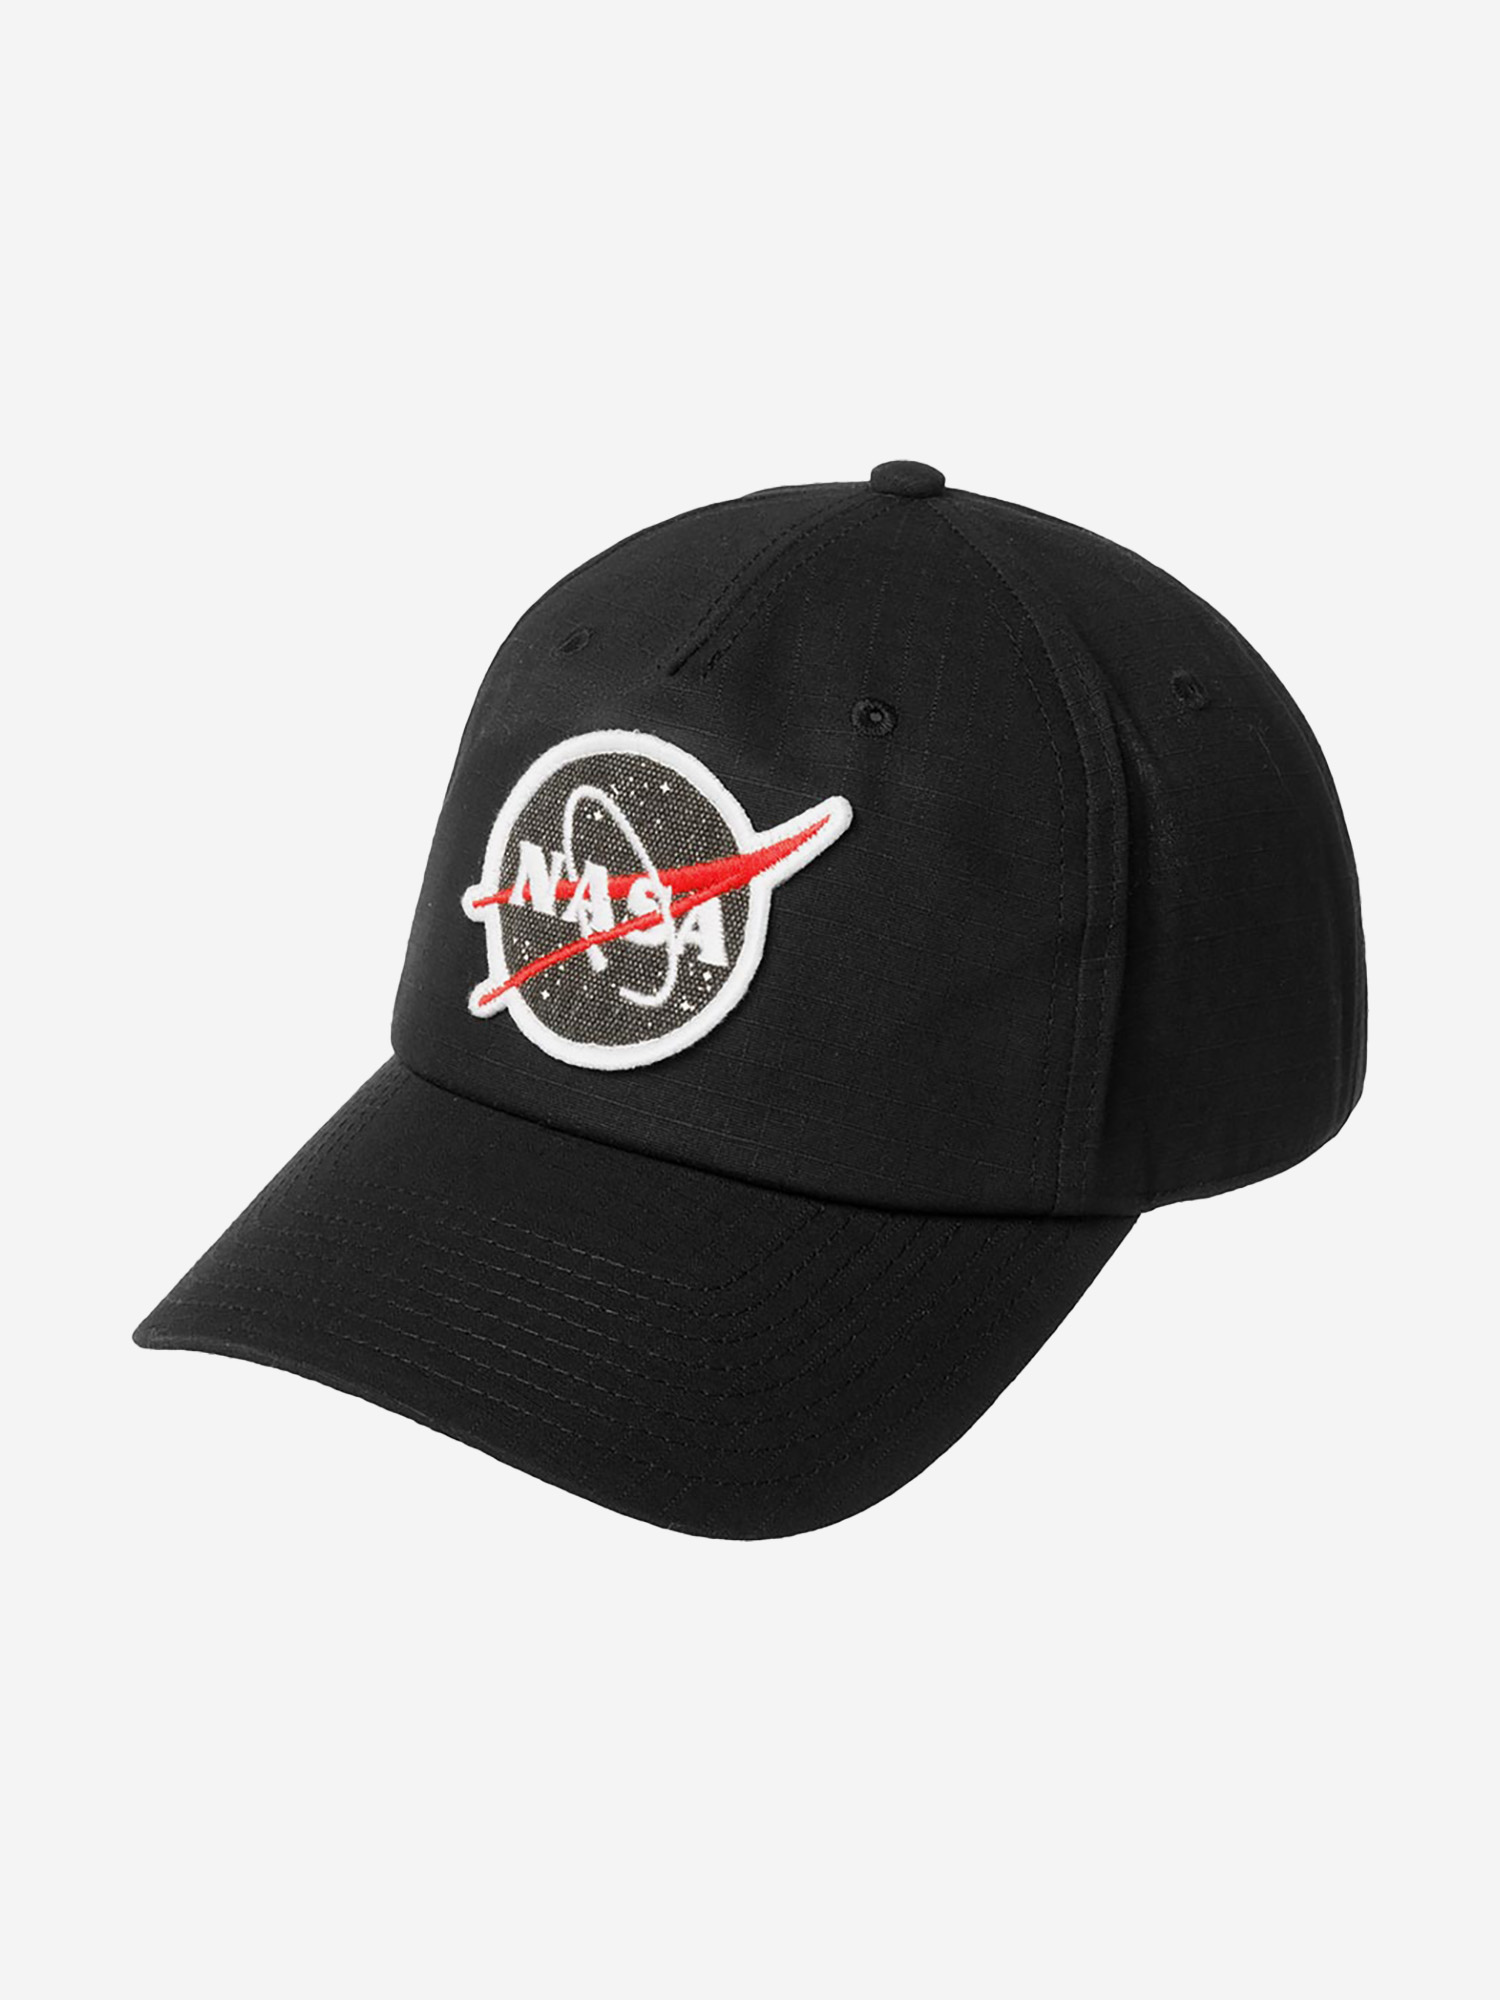 Бейсболка AMERICAN NEEDLE 45060A-NASA Space with NASA Surplus (черный), Черный nasa archives